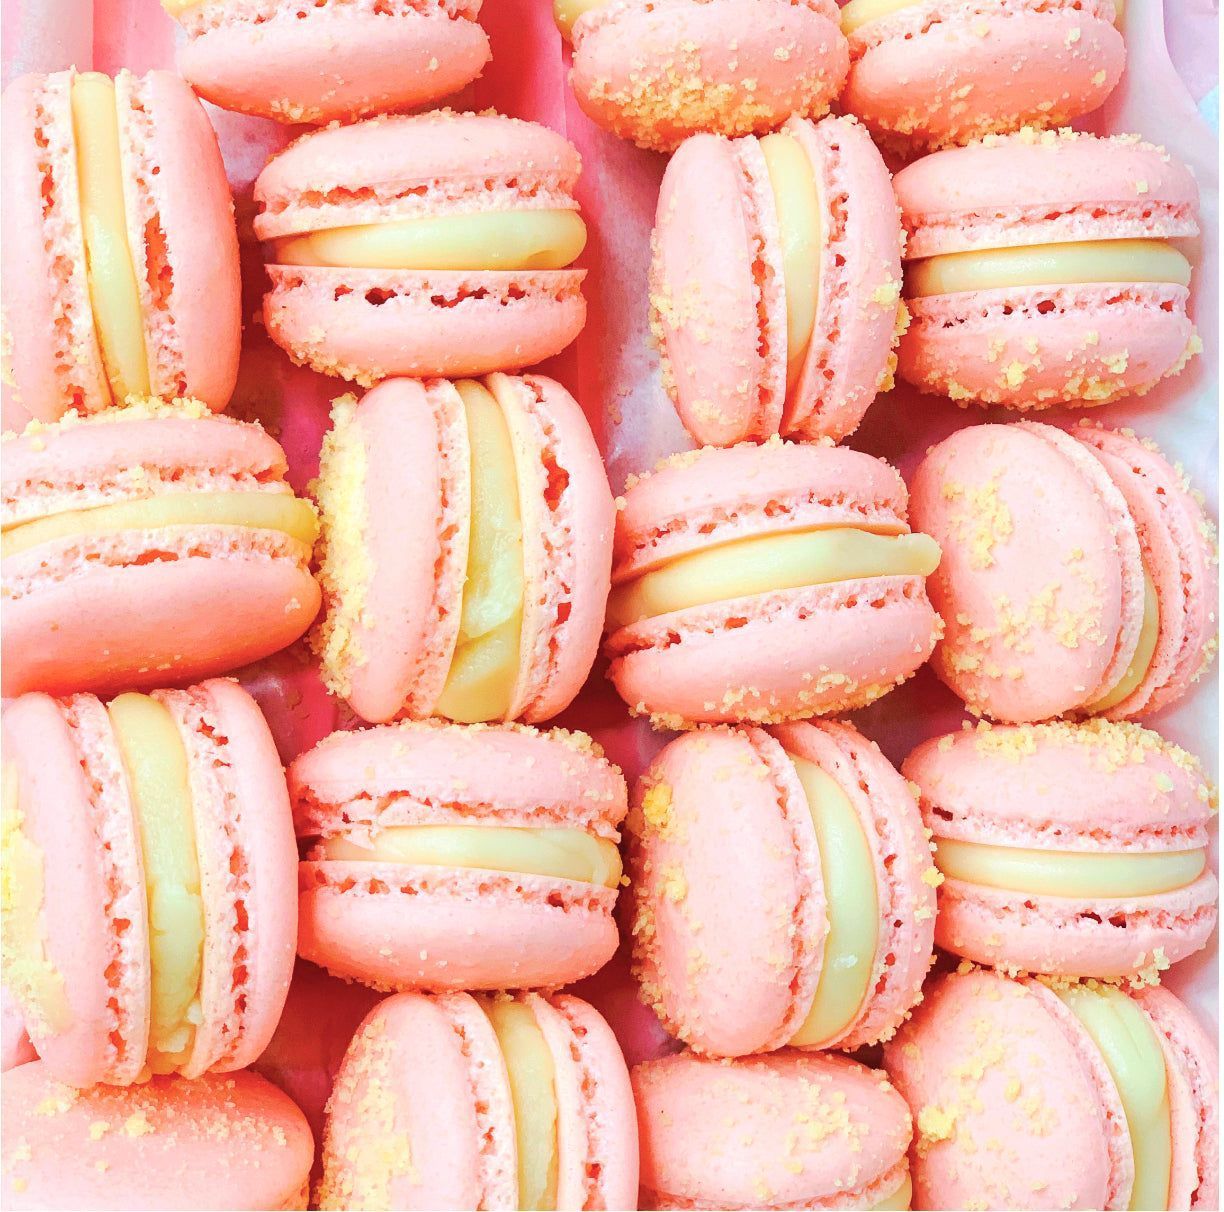 A box of pink and yellow macarons - Macarons